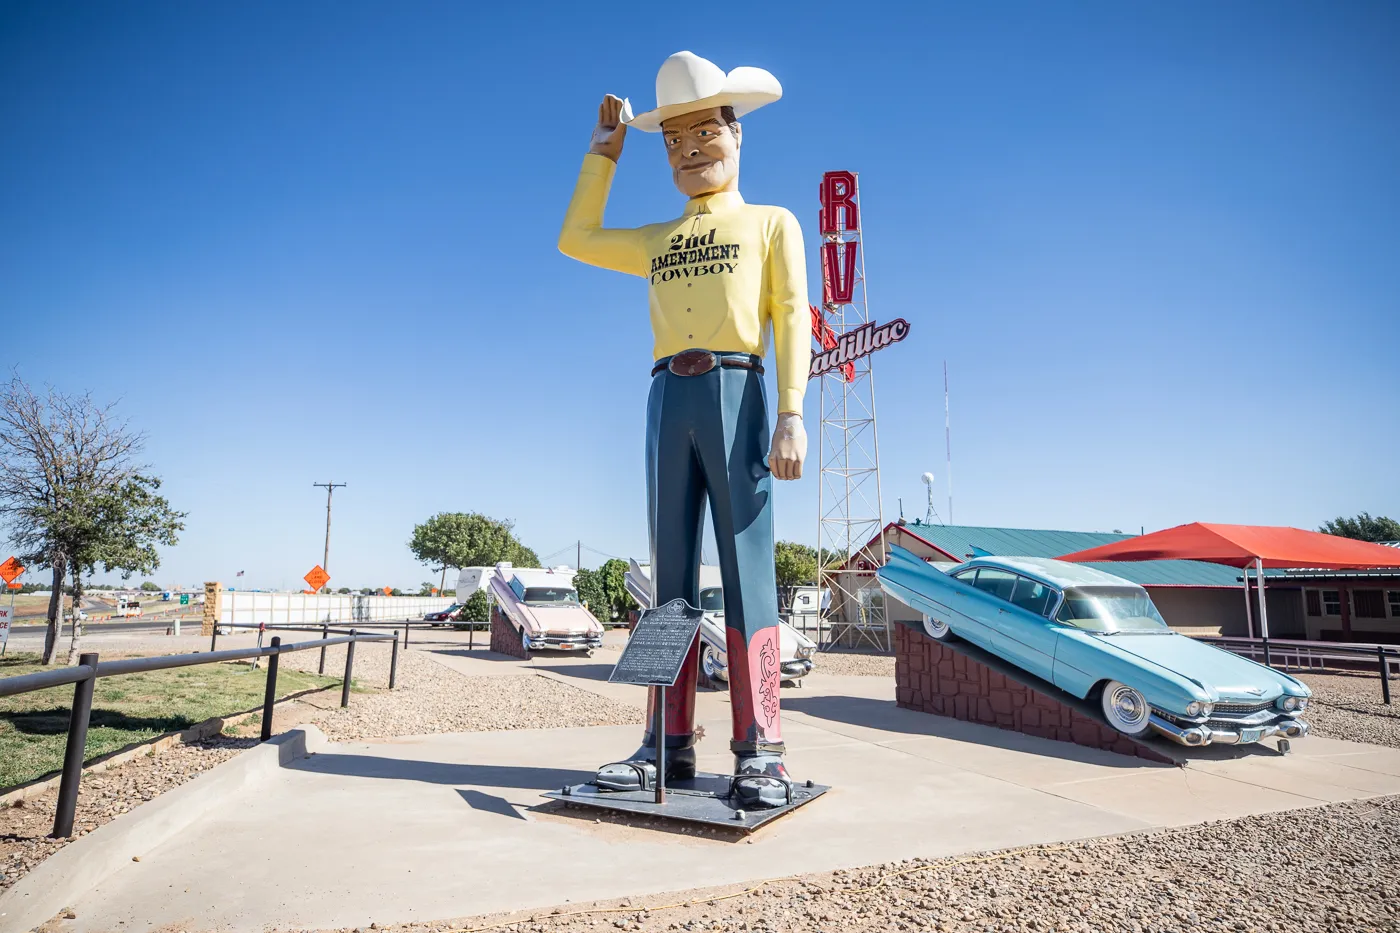 2nd Amendment Cowboy Muffler Man in Amarillo, Texas Route 66 roadside attraction